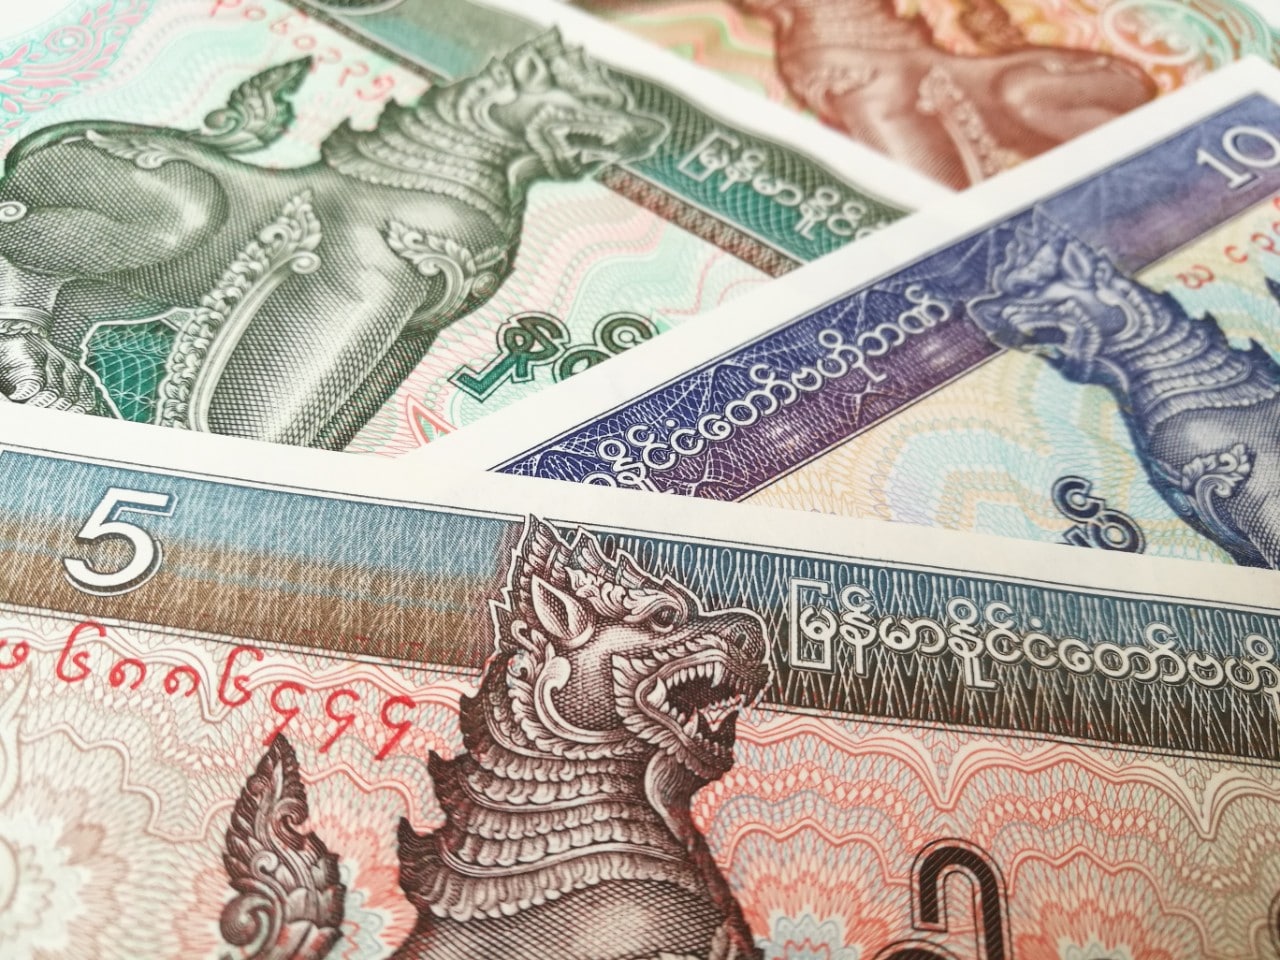 Photograph of Myanmar bank notes